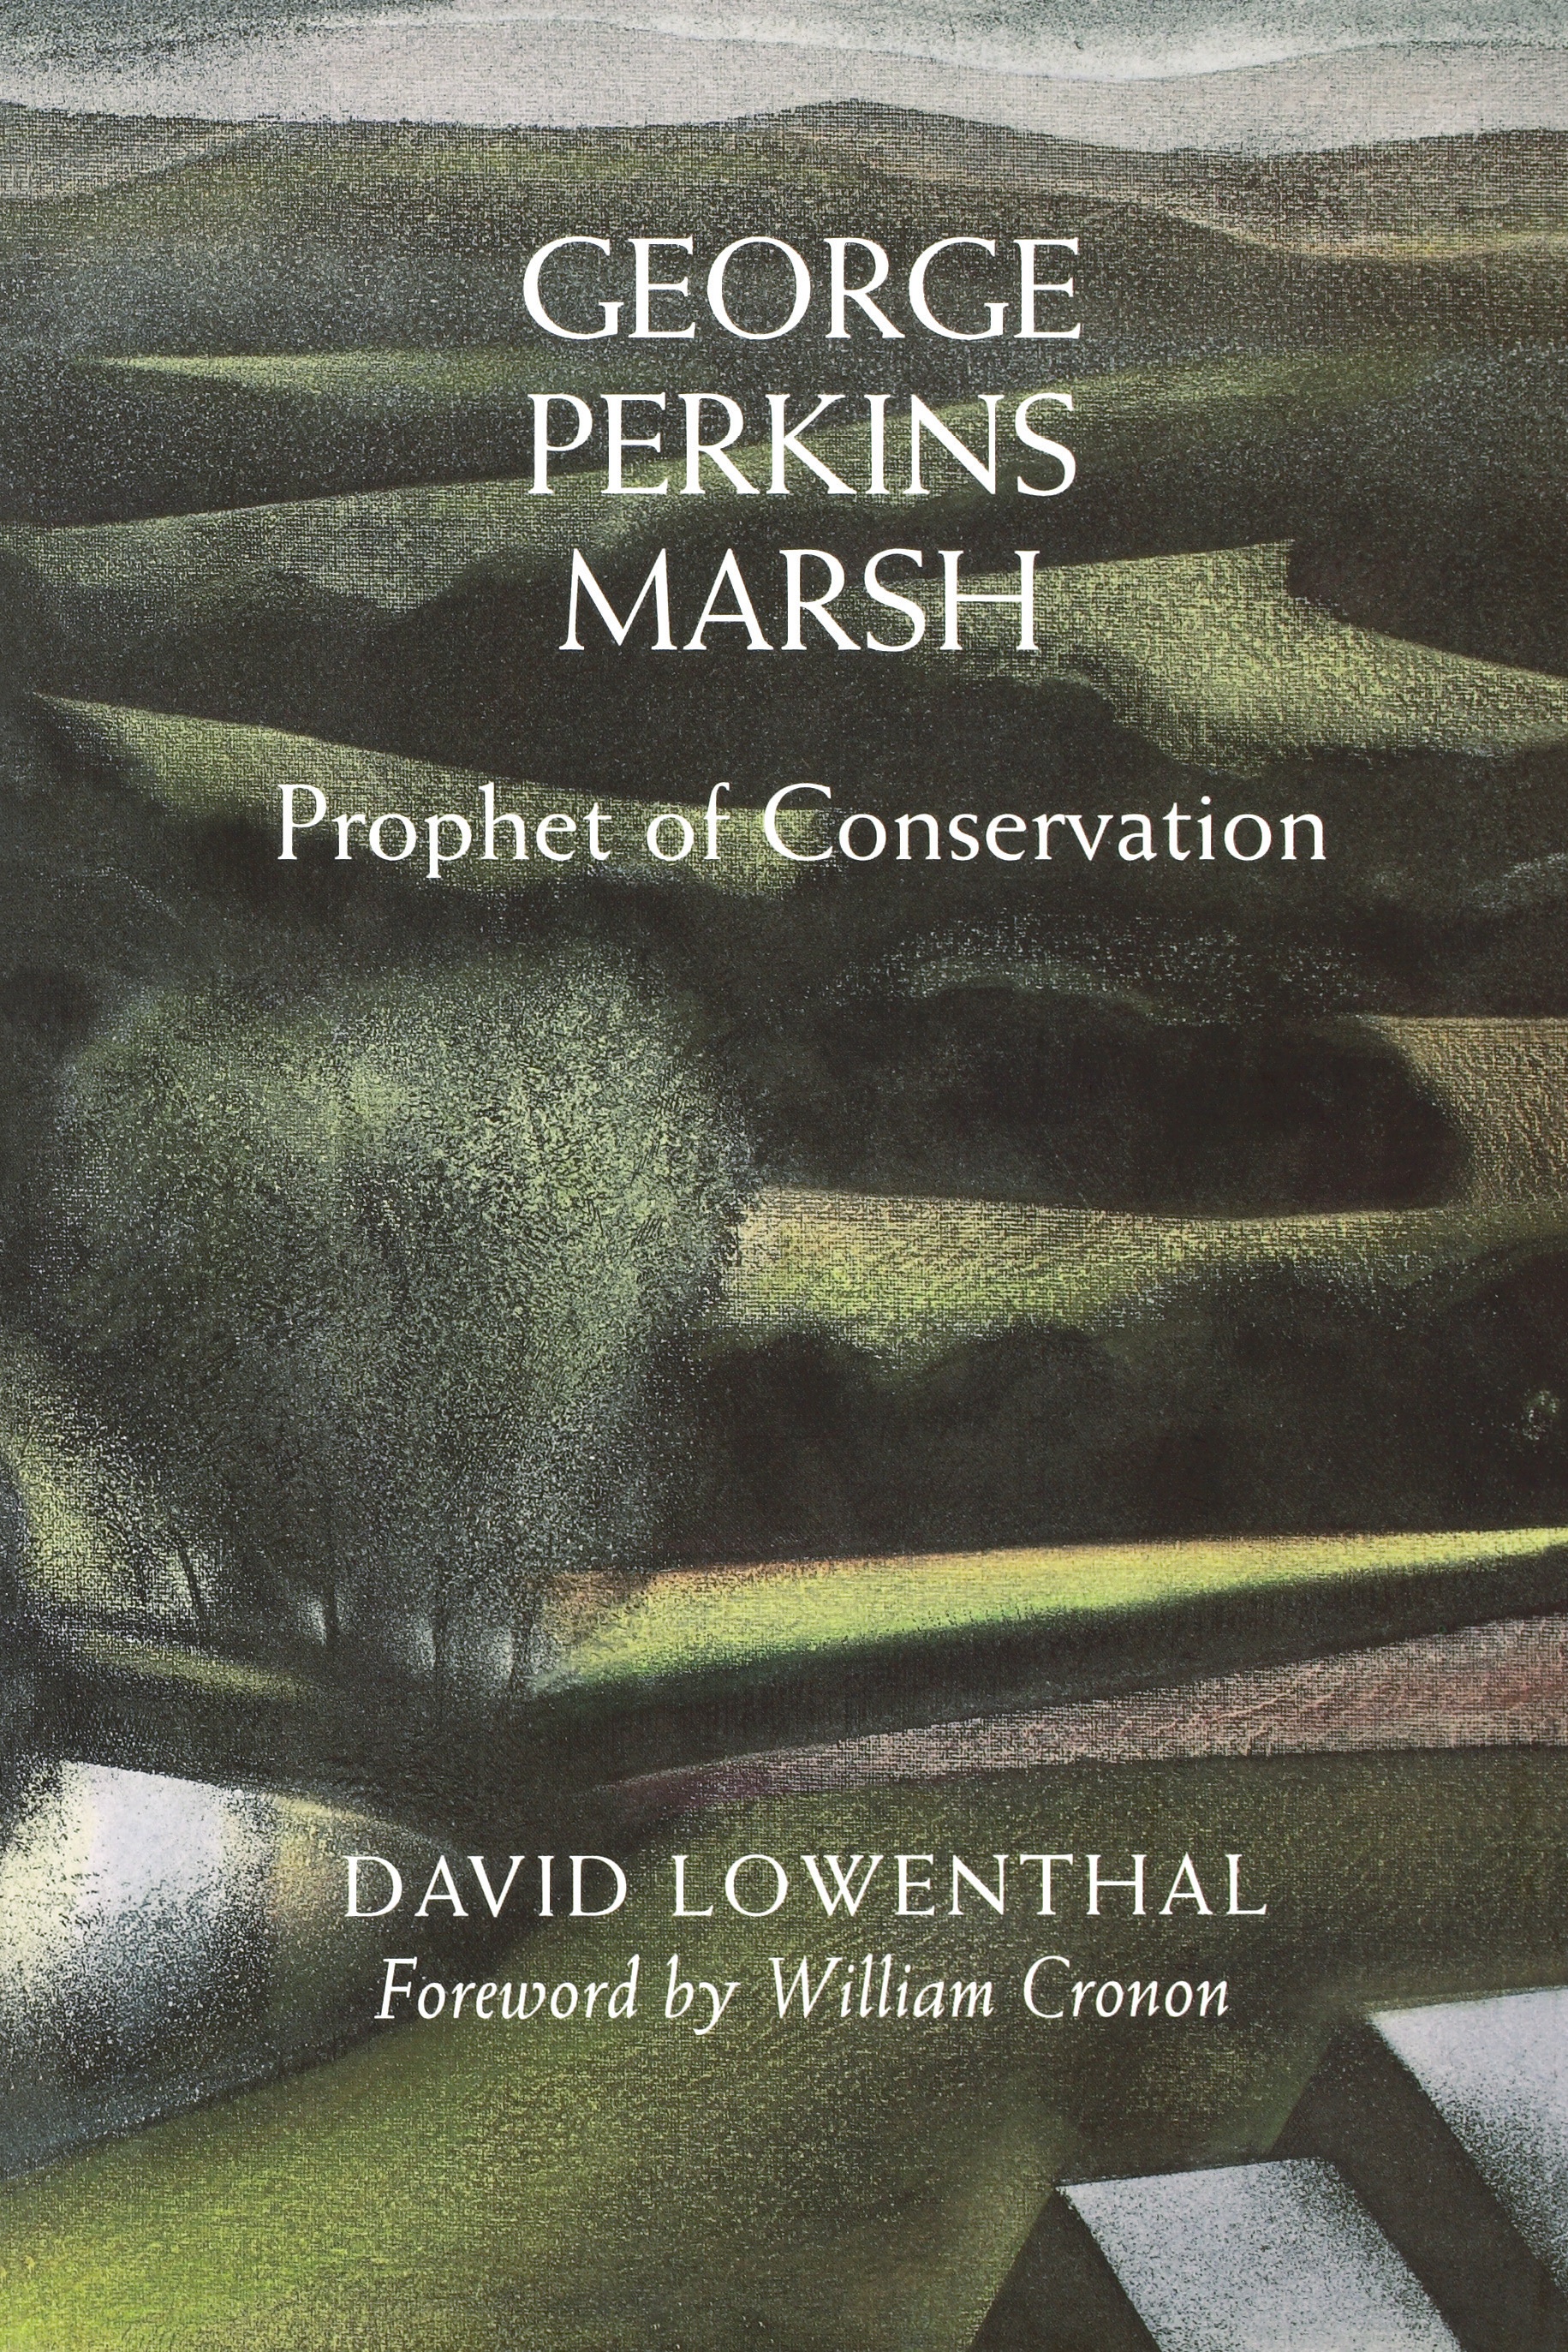 George Perkins Marsh: Prophet of Conservation | Environment & Society Portal